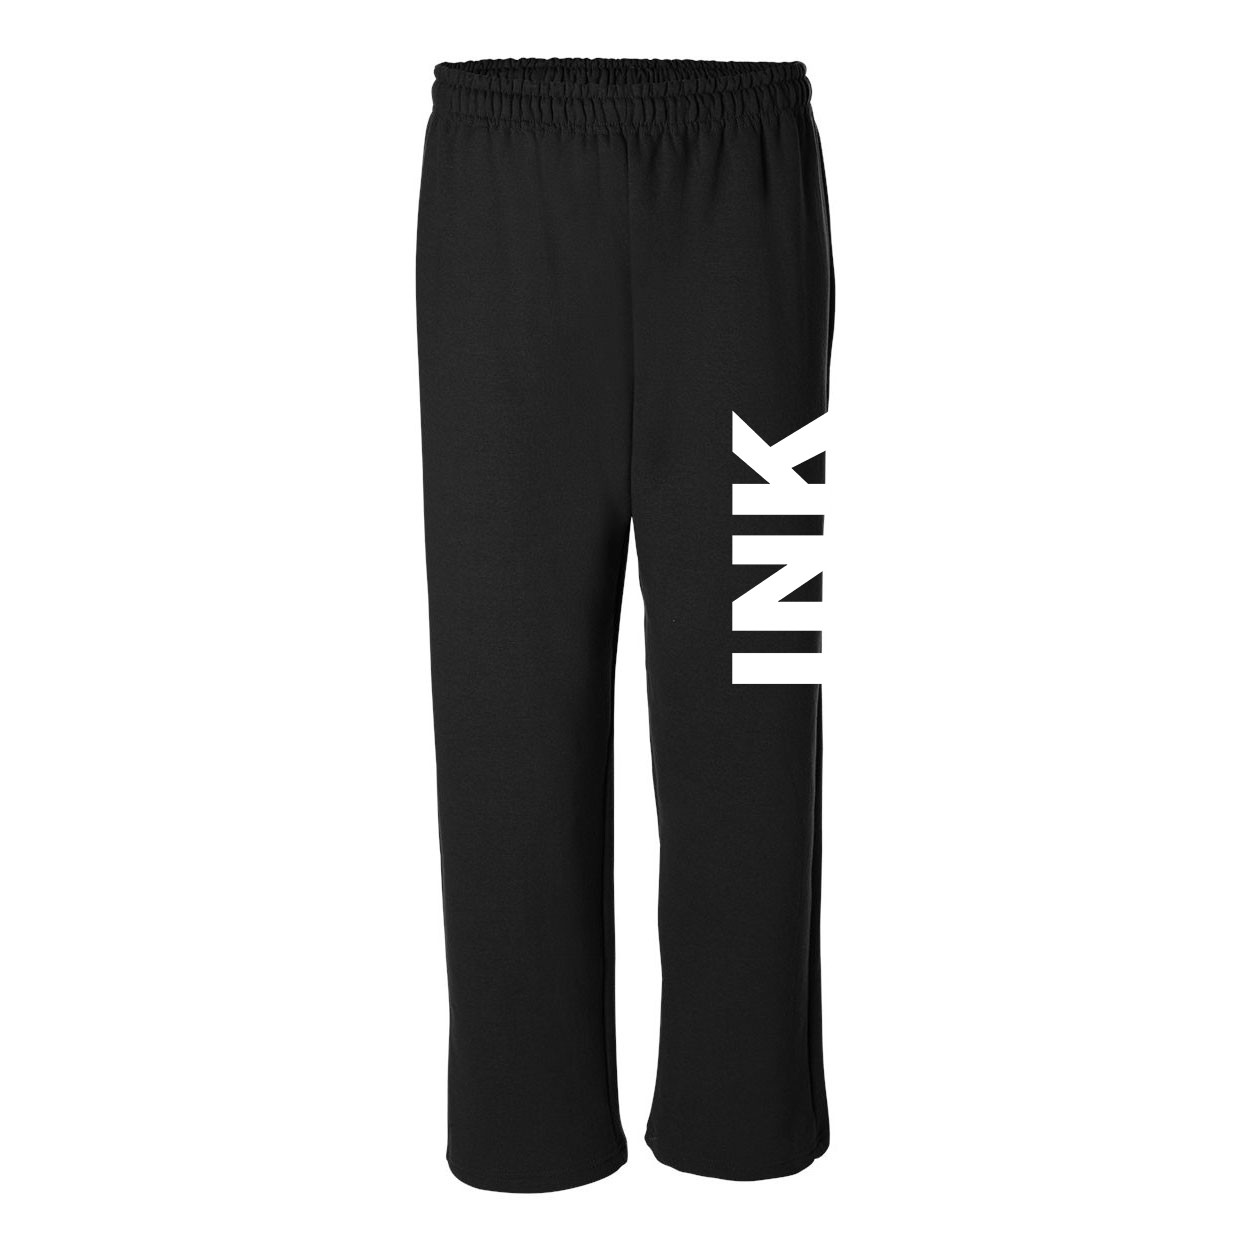 Ink Brand Logo Classic Men's Unisex Sweatpants Black (White Logo)